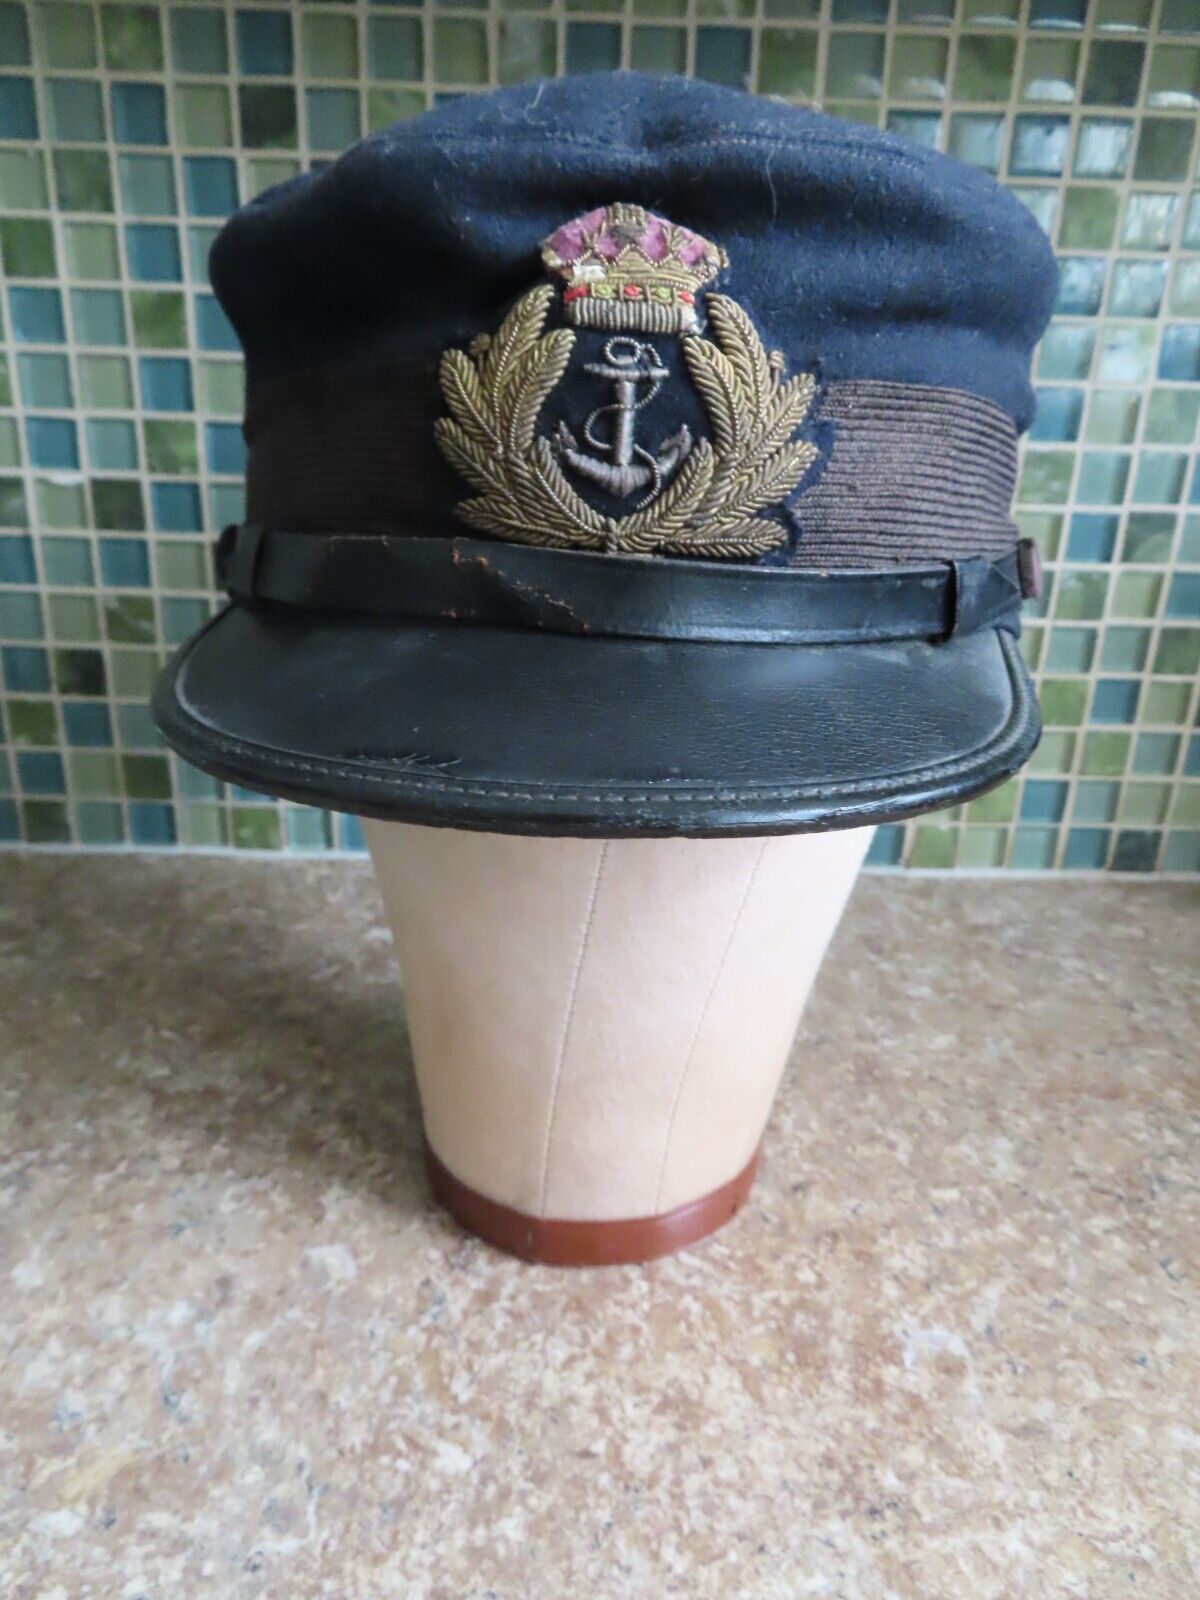 VTG Early British Military Royal Navy Wool Visor Hat Cap With Bullion Insignia